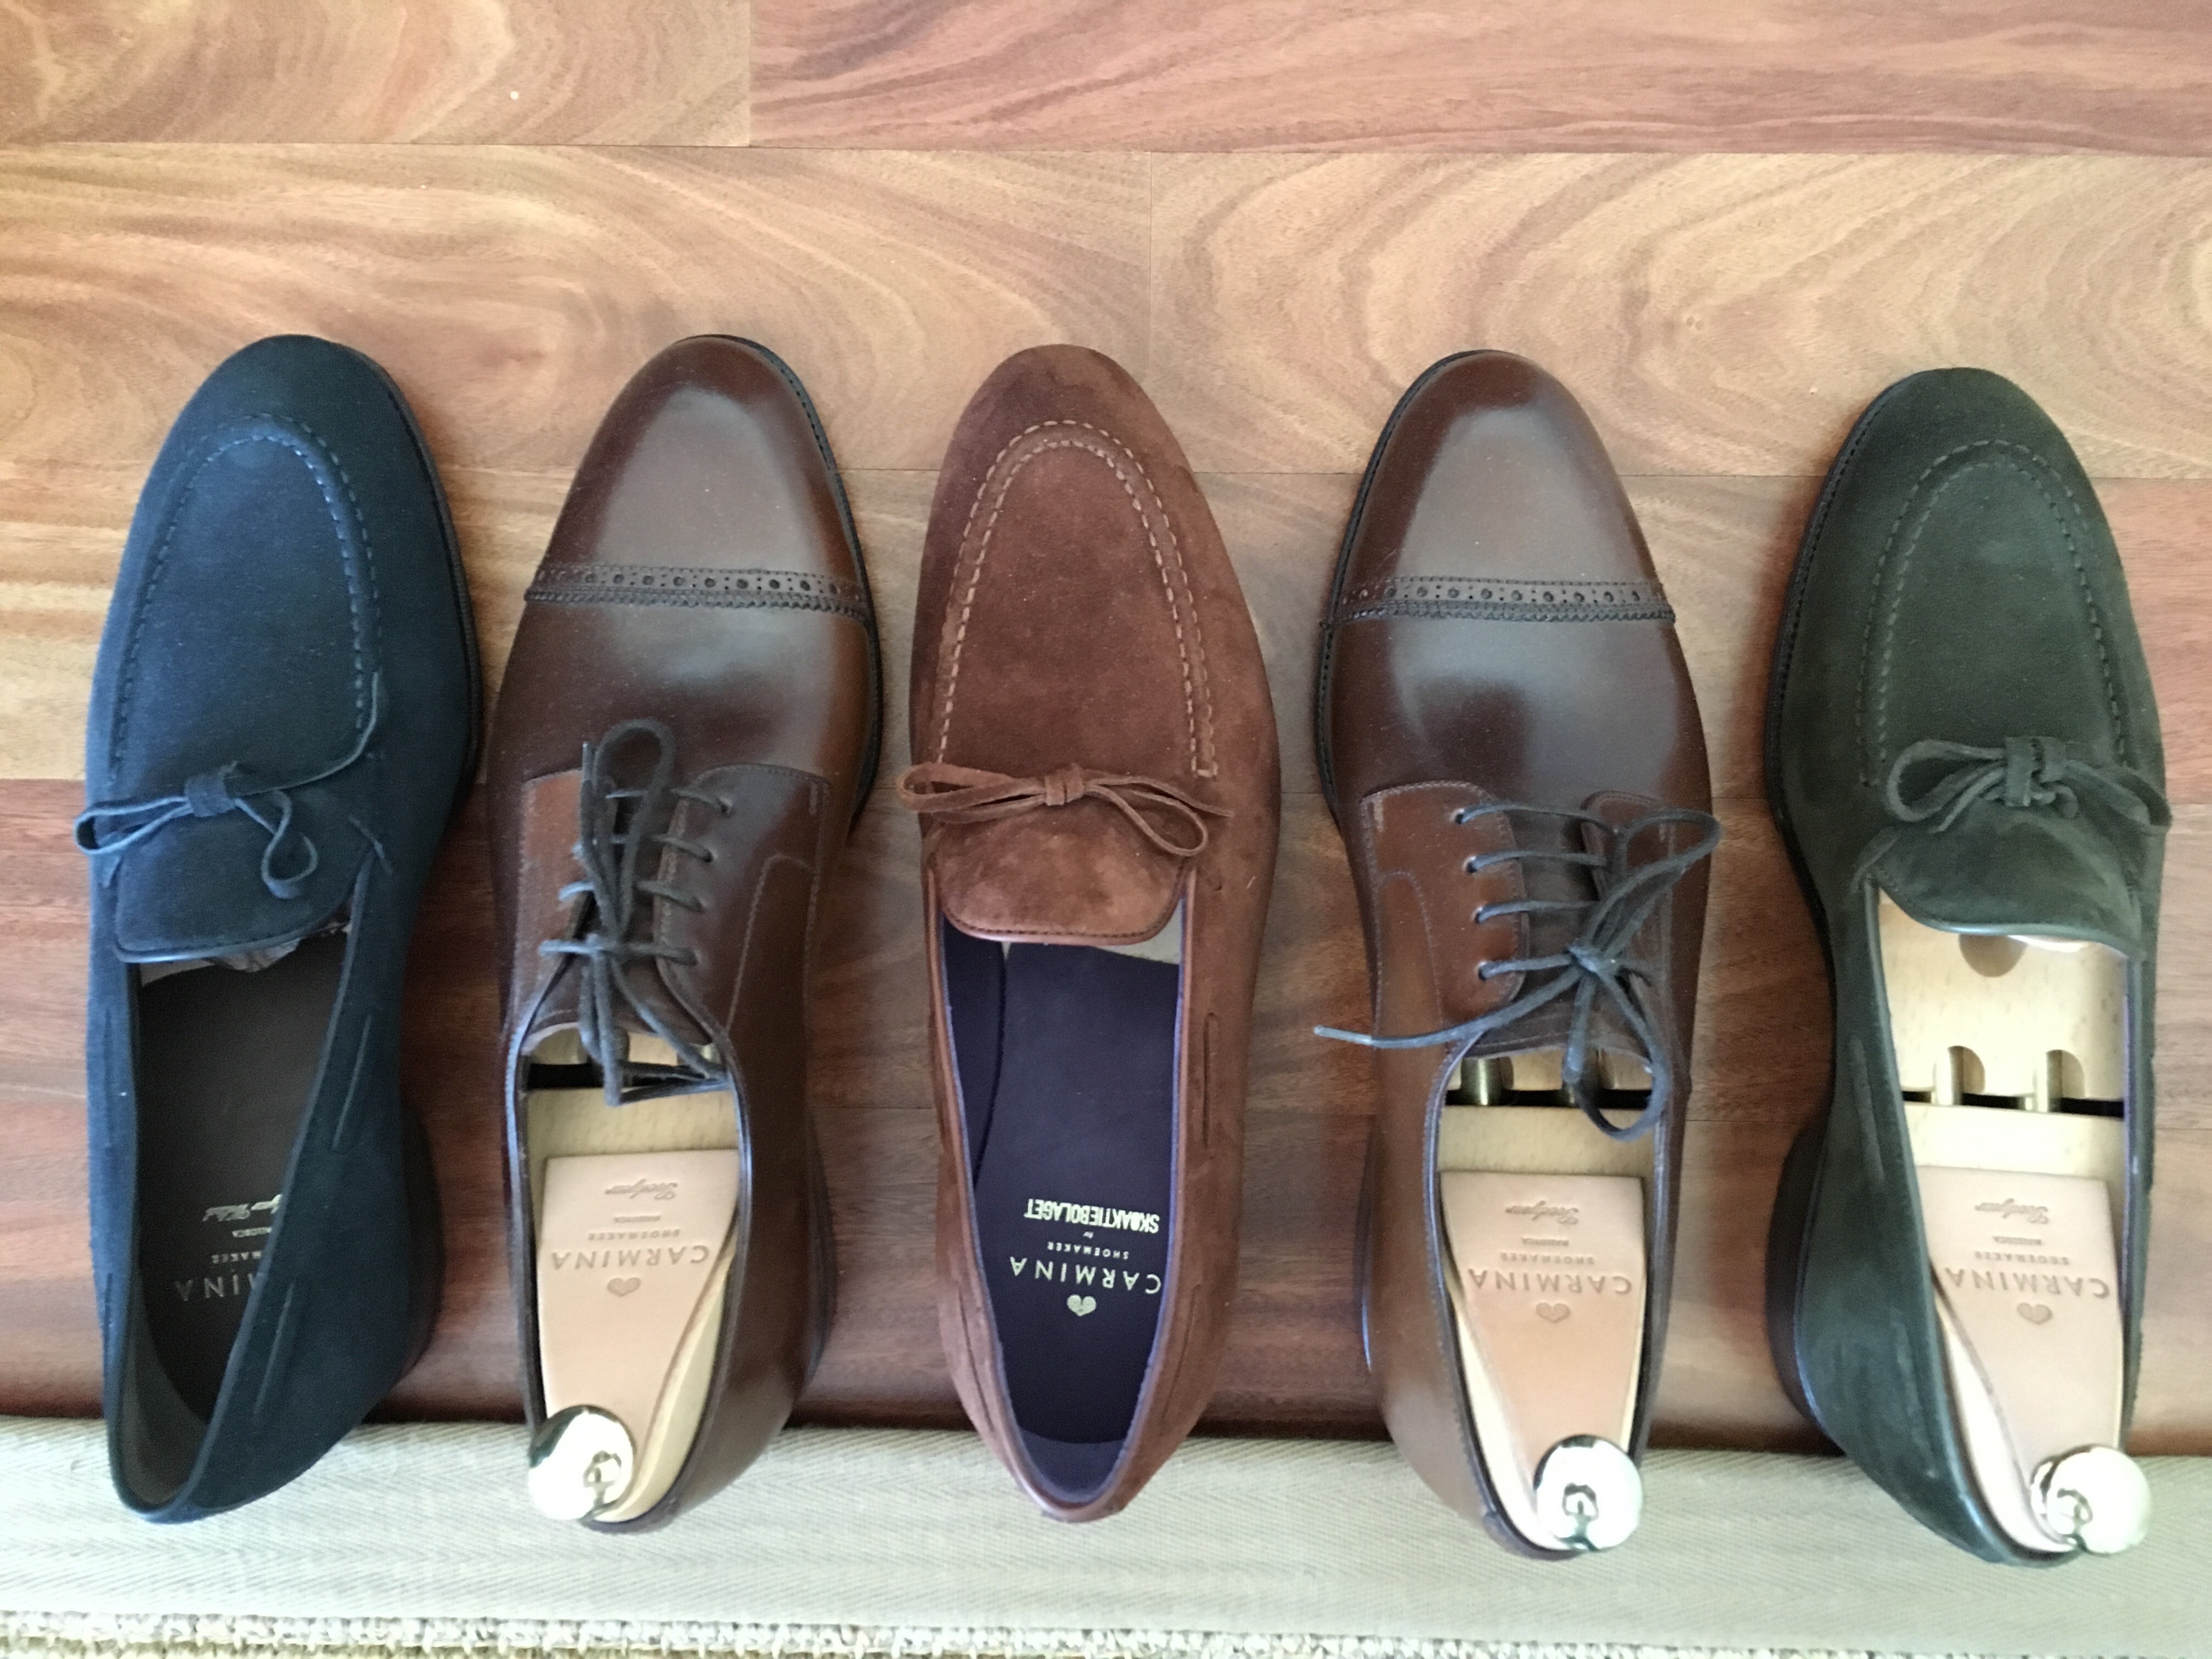 Carmina Shoes - Definitive Thread (reviews, advice, sizing, etc ...